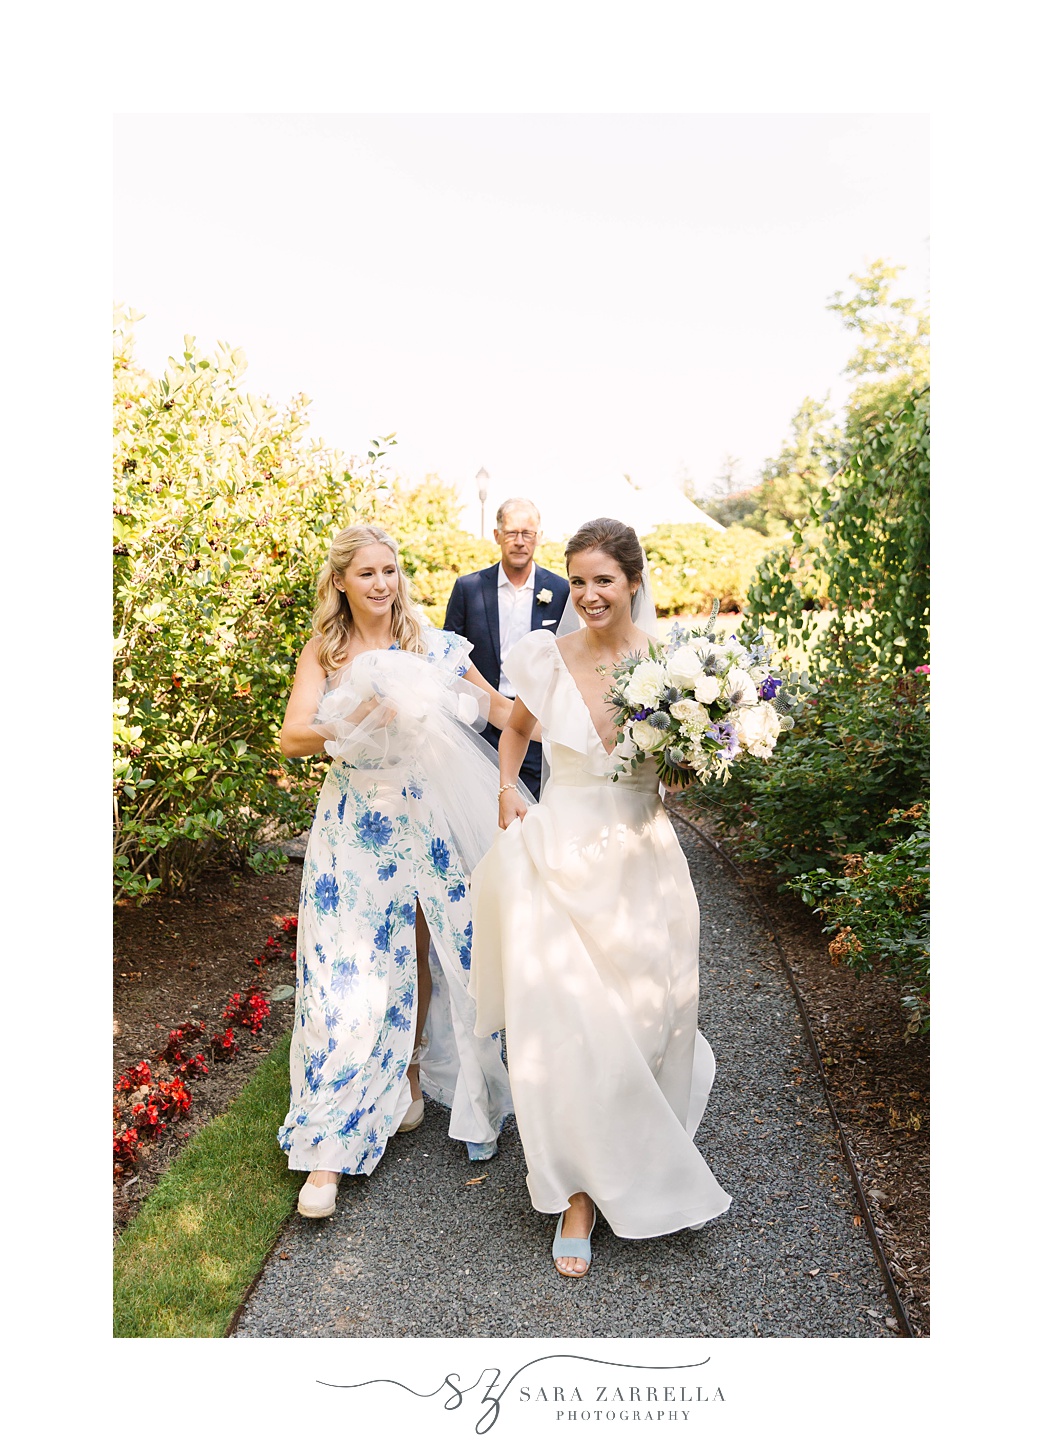 sister helps bride carry wedding dress